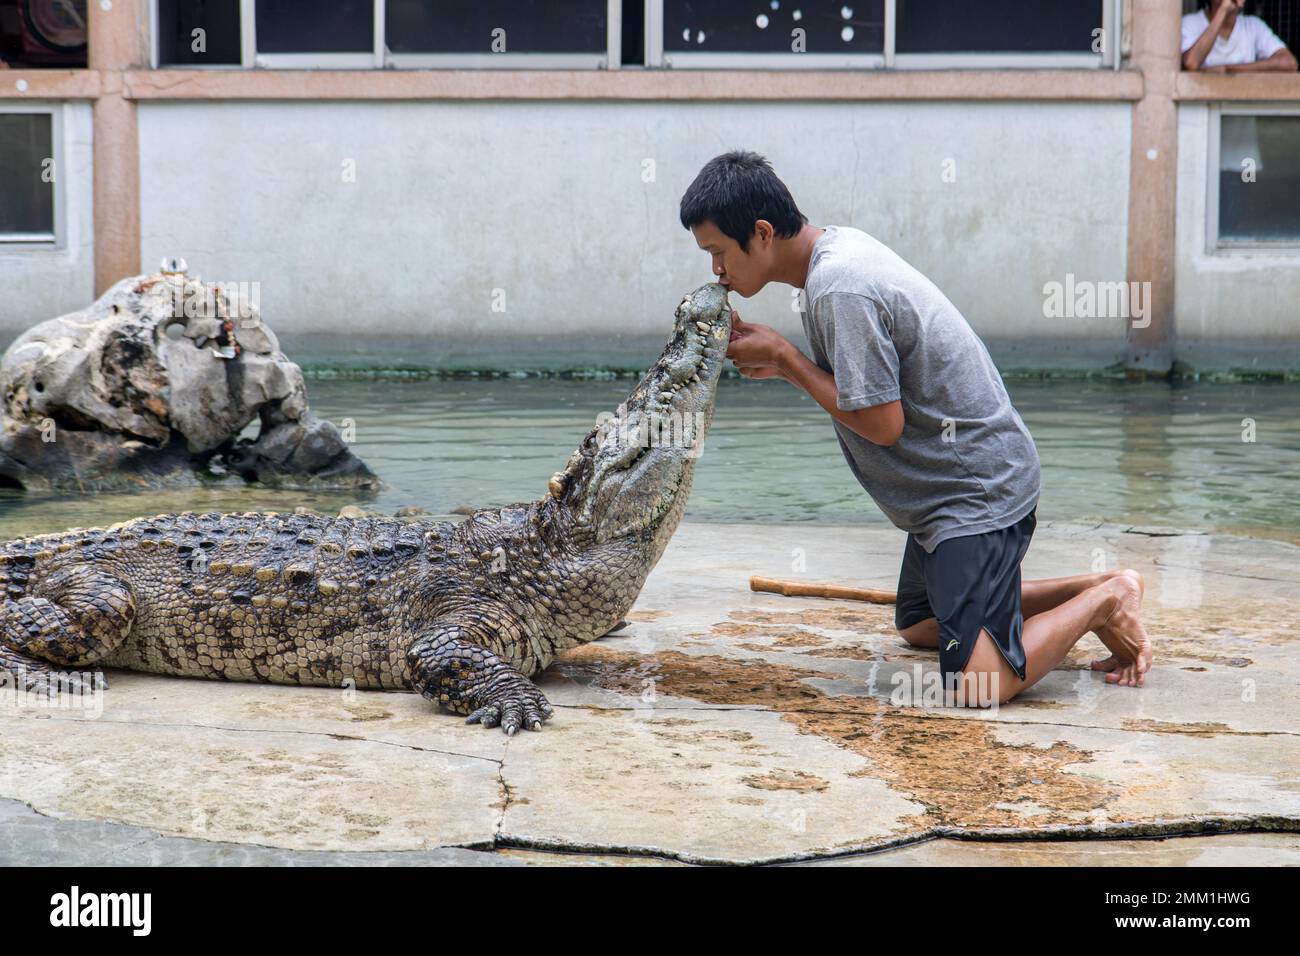 SAMUT PRAKAN, THAILAND, NOV 05 2016, Dangerous performance with wild animals. The tamer kisses the crocodile snout. Stock Photo